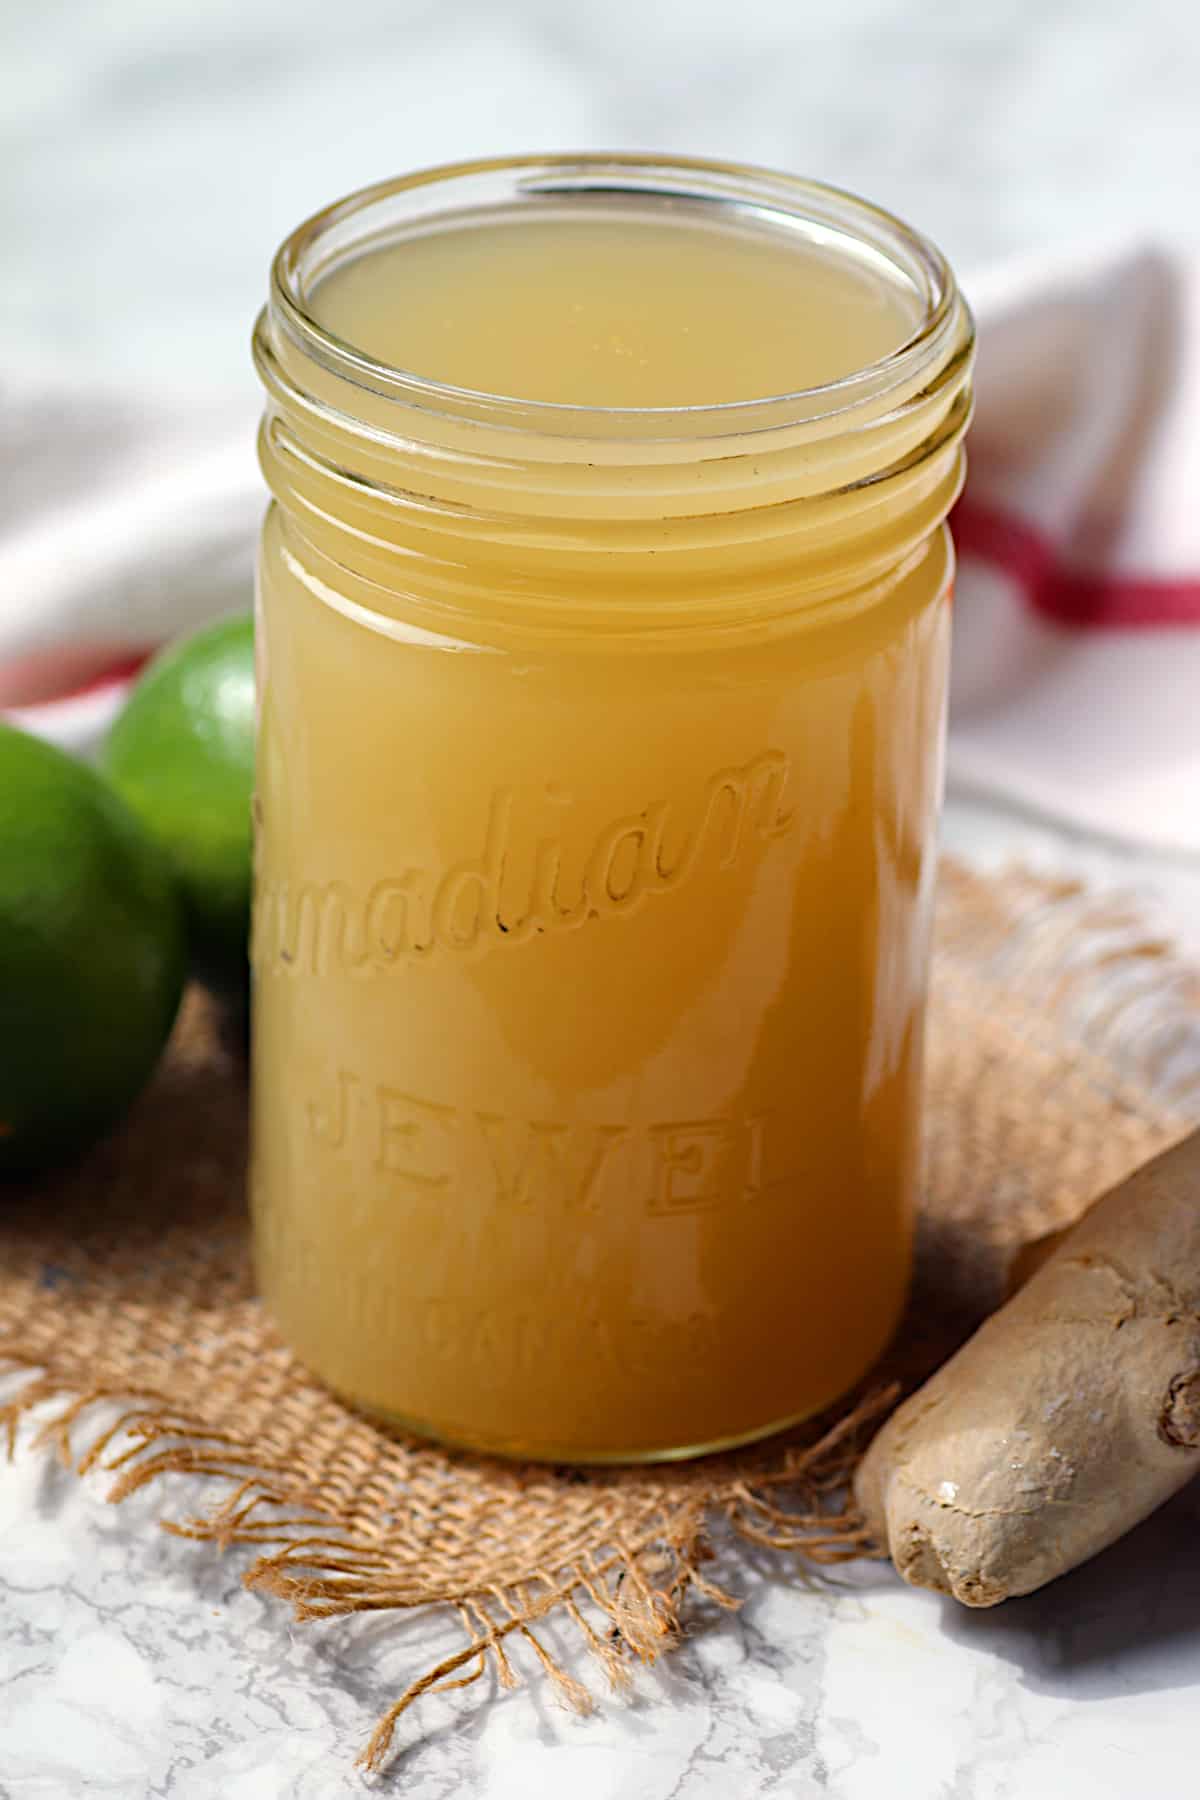 A vintage jar full of homemade ginger lime syrup.